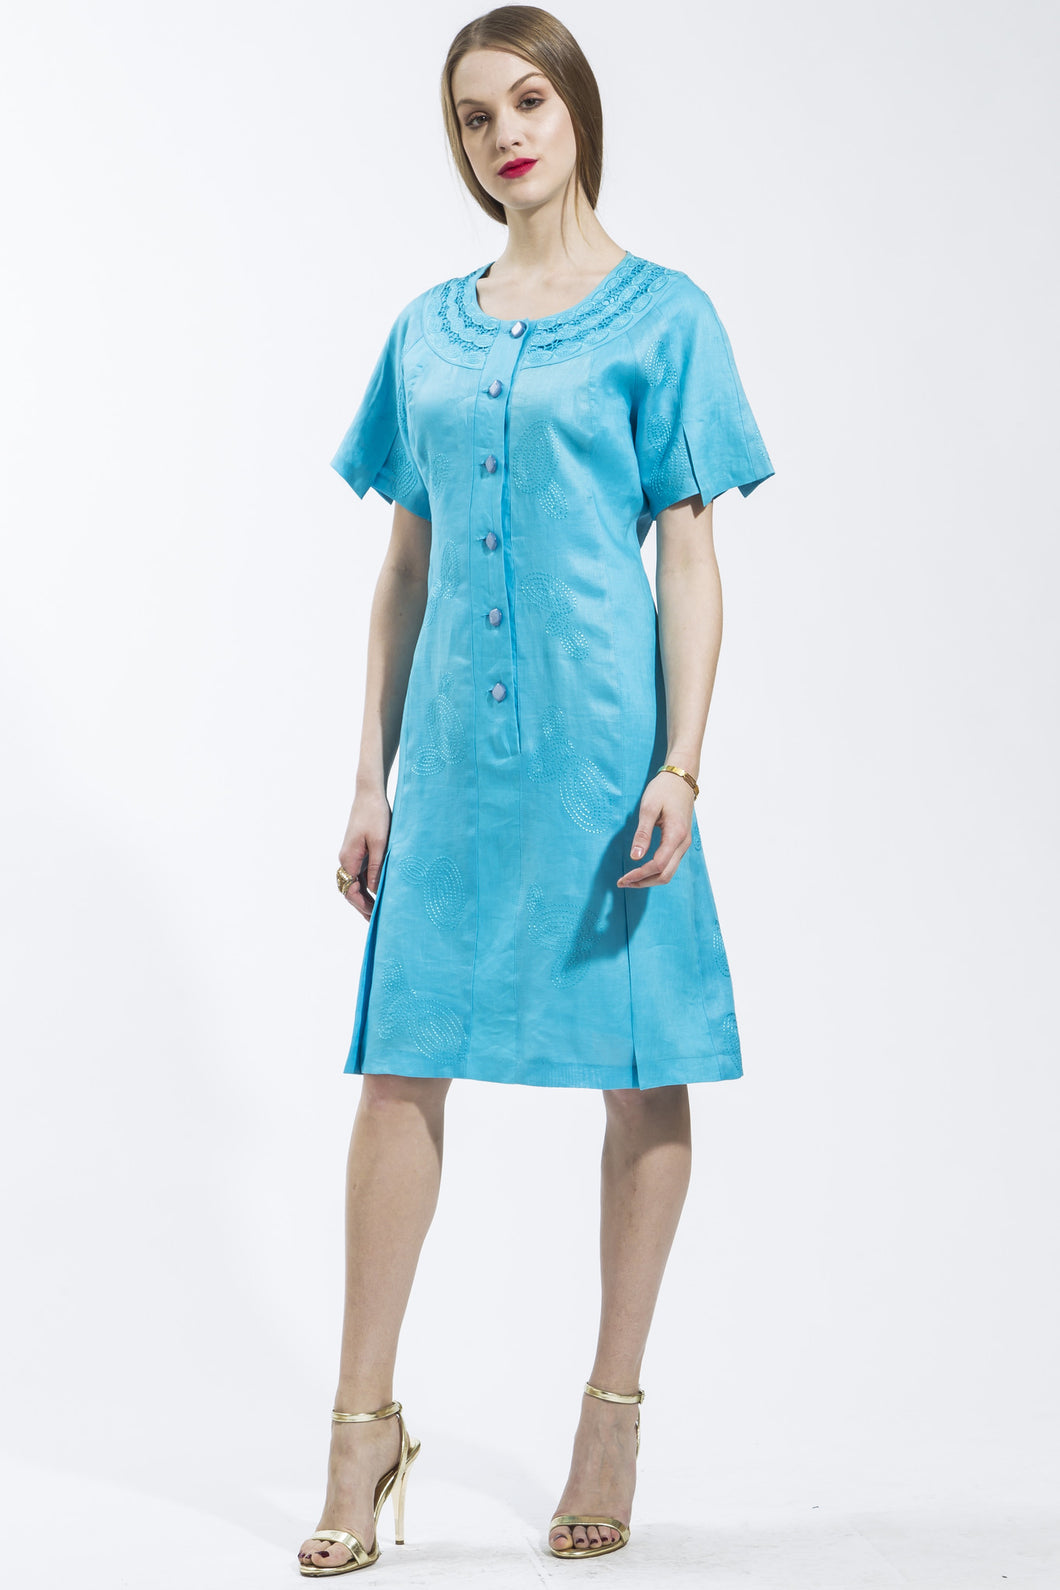 Tunic Dress (Aqua) Style # 1703